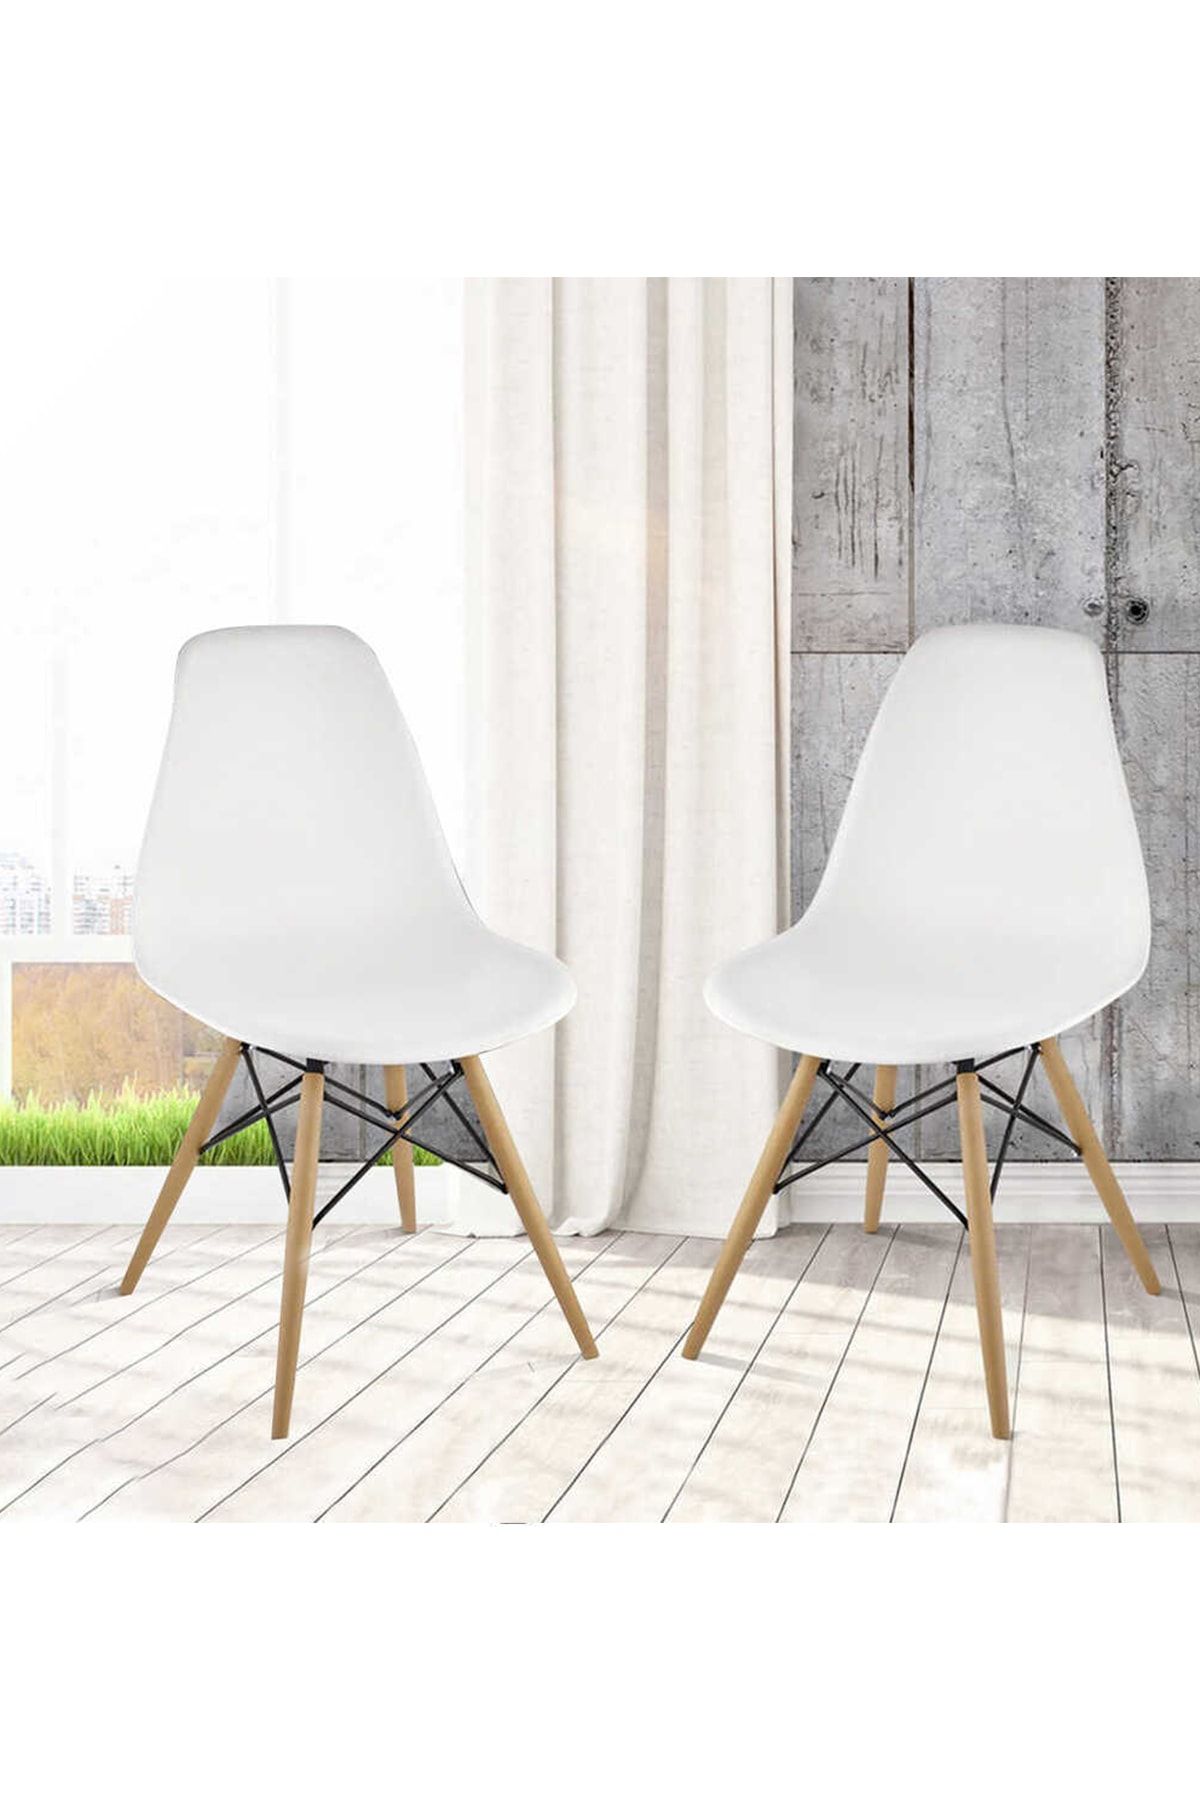 Dorcia Home Beyaz Eames Sandalye - 2 Adet - Cafe Balkon Mutfak Sandalyesi